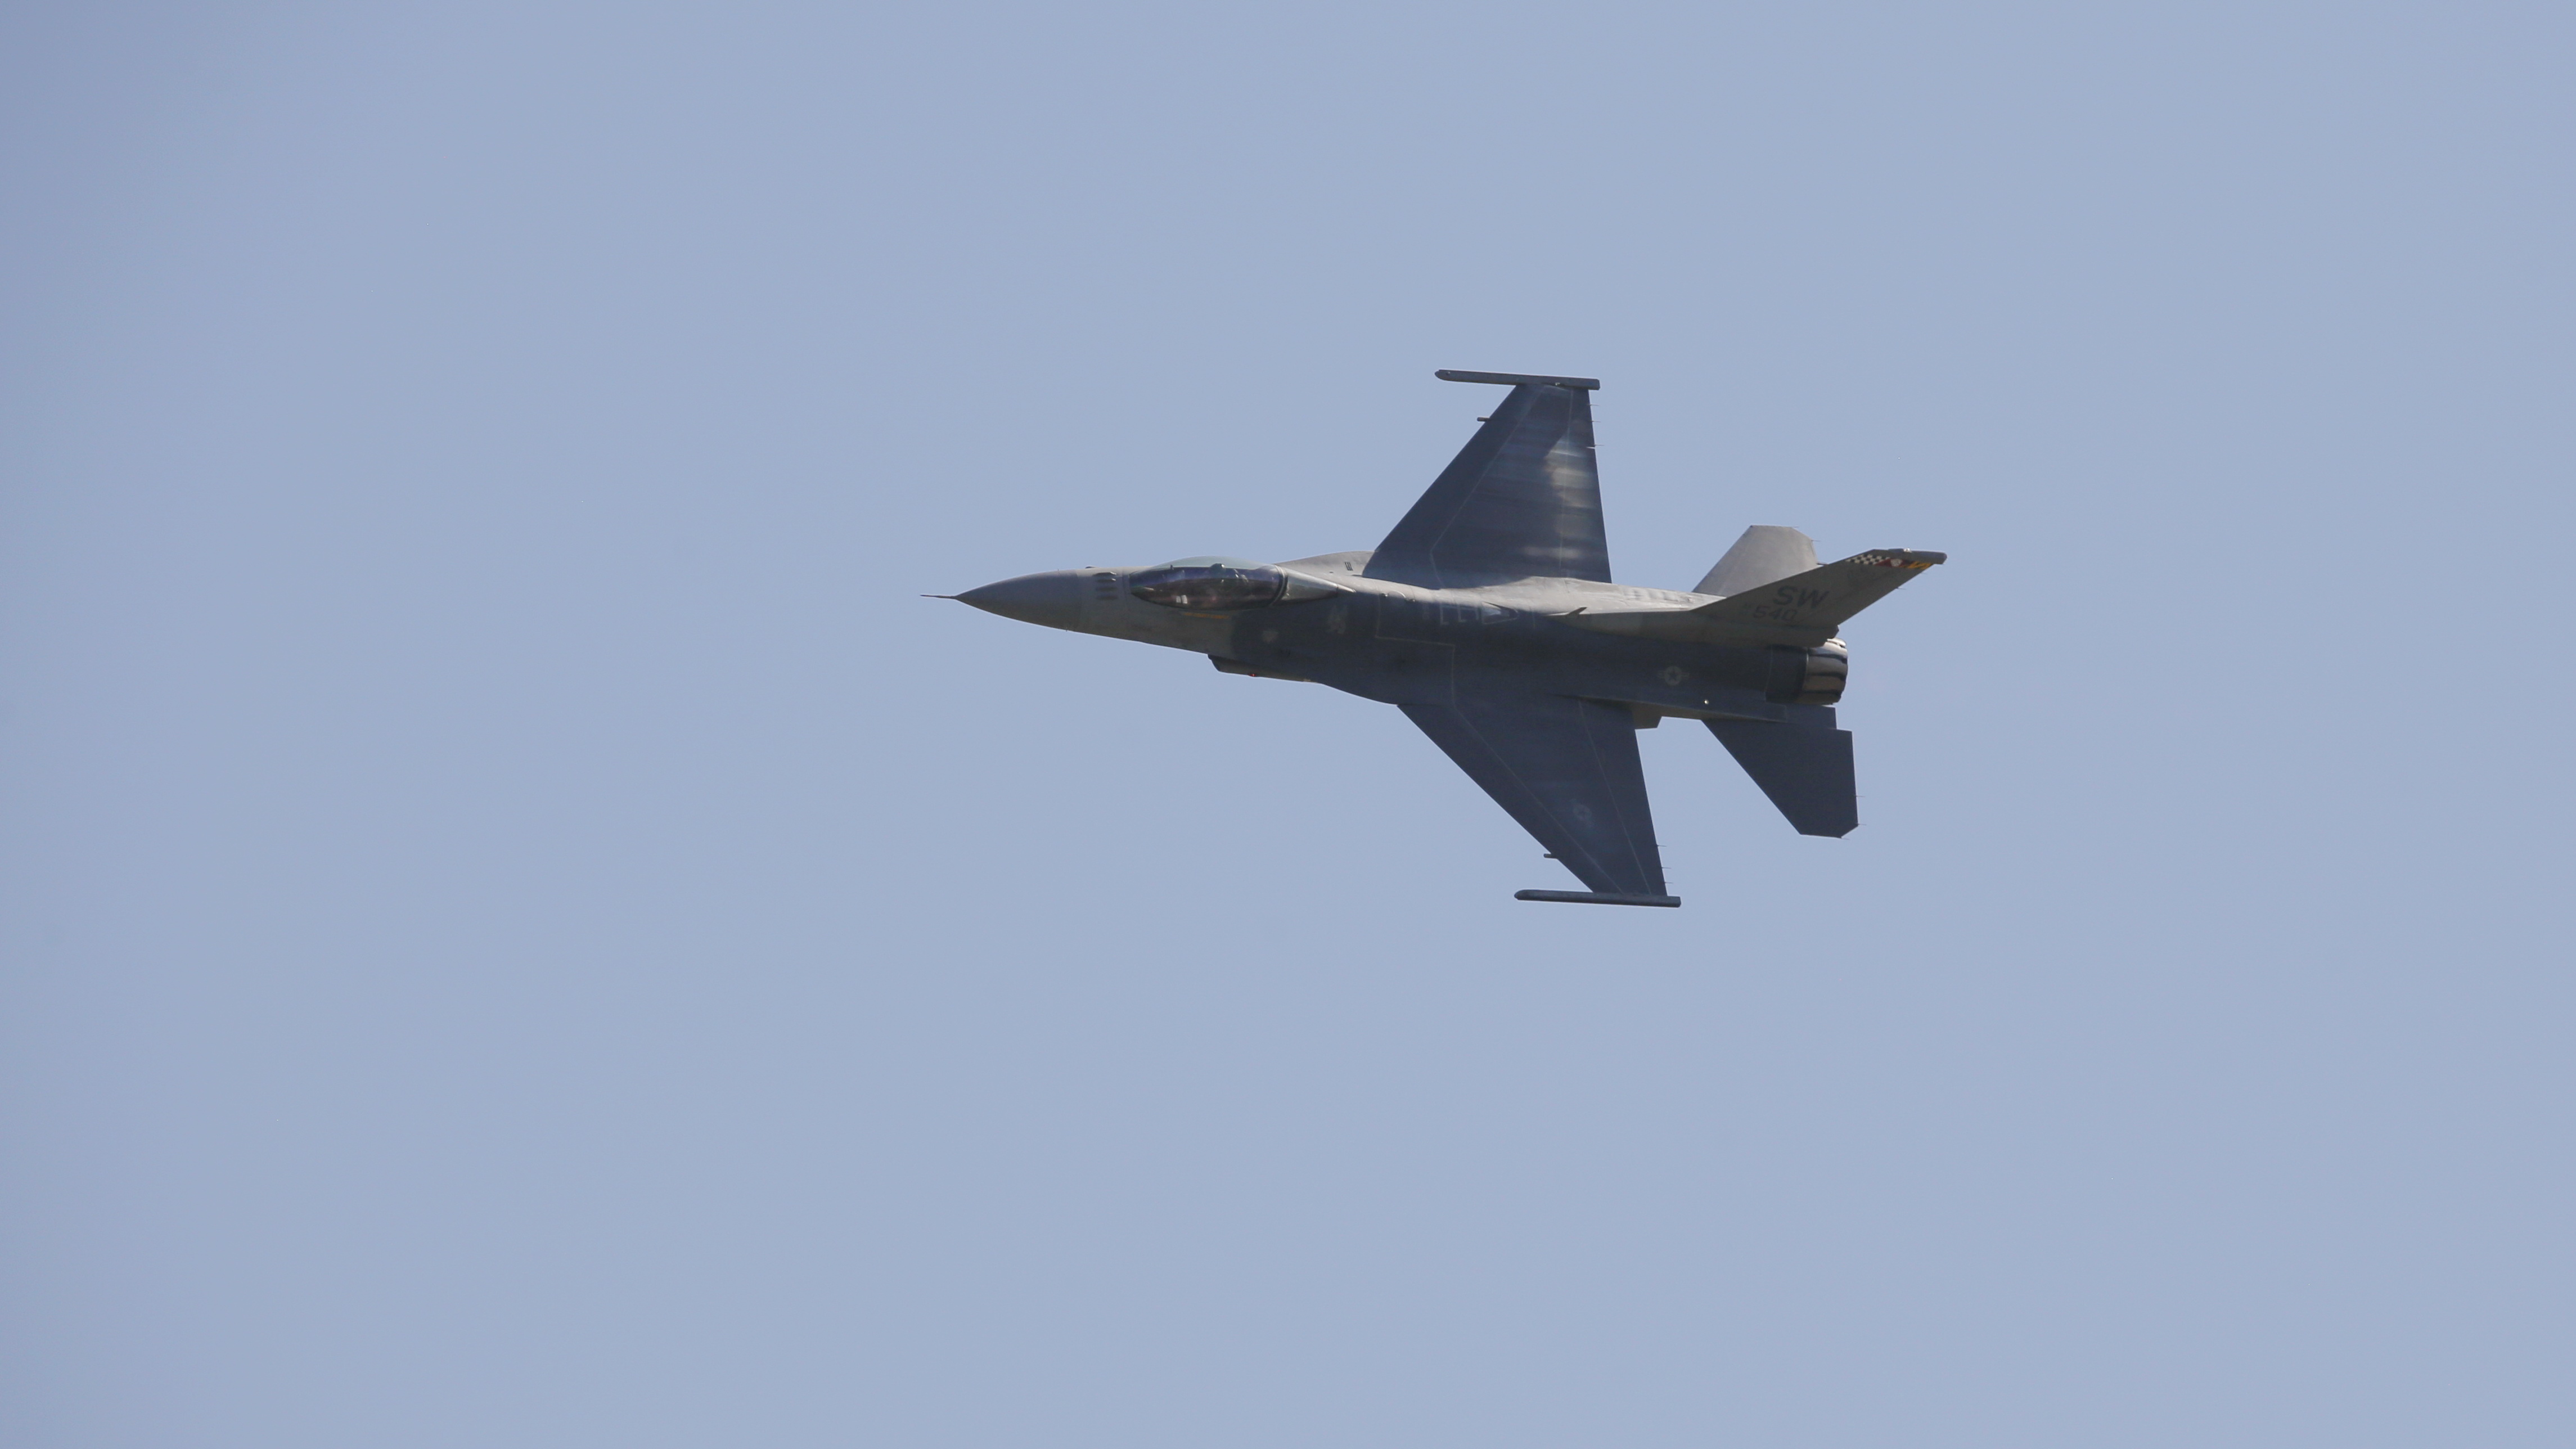  Us To Back Providing F-16 Fighter Jets To Ukraine: Nsa-TeluguStop.com